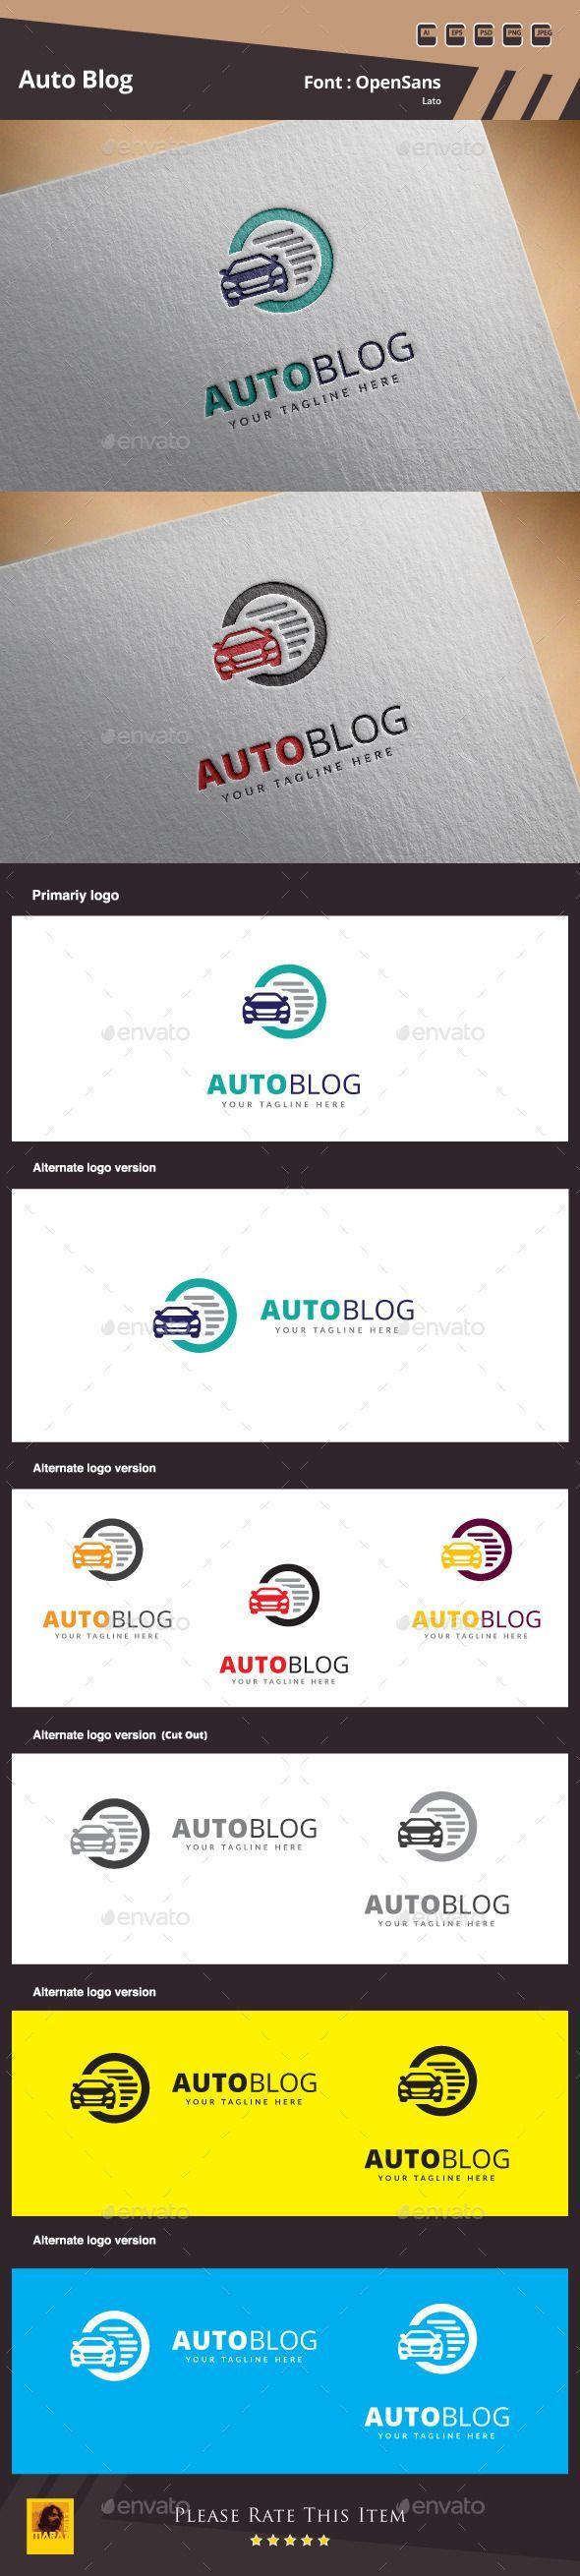 Auto Clan Logo - Auto Blog Logo Template | Object Logo Simple | Pinterest | Logo ...